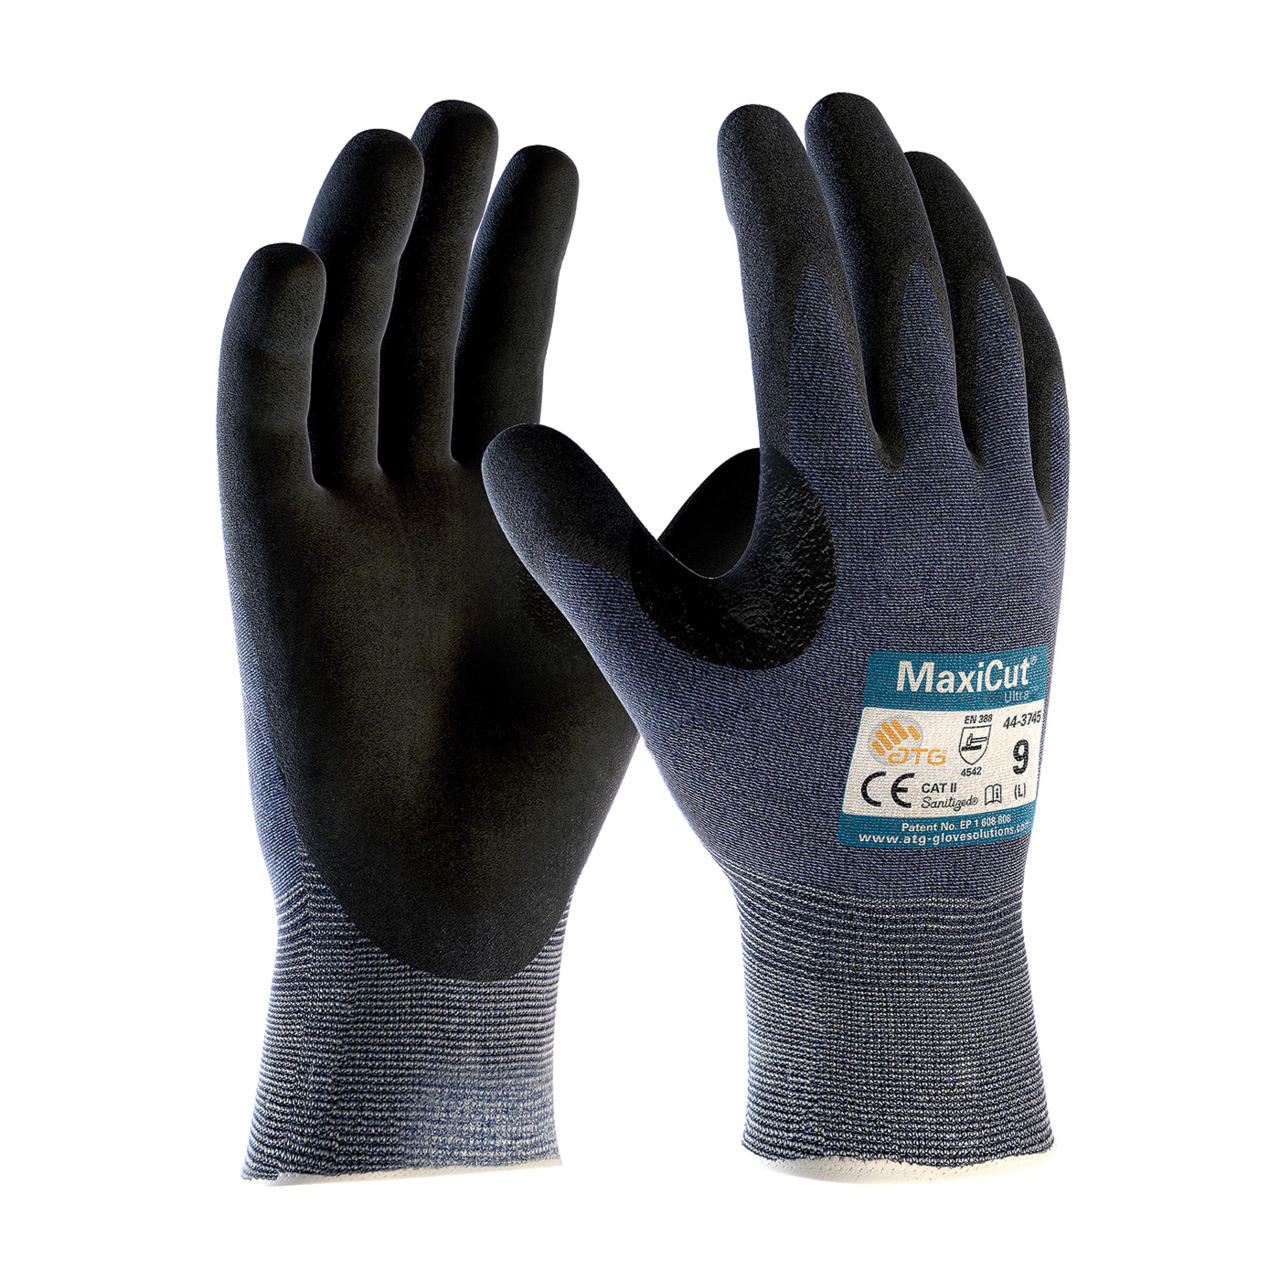 White Cap  MaxiCut Ultra XL Black Microfoam ANSI Cut A3 En 5 Nitrile  Coated Palm And Finger Tips Cut Resistant Gloves by ATG